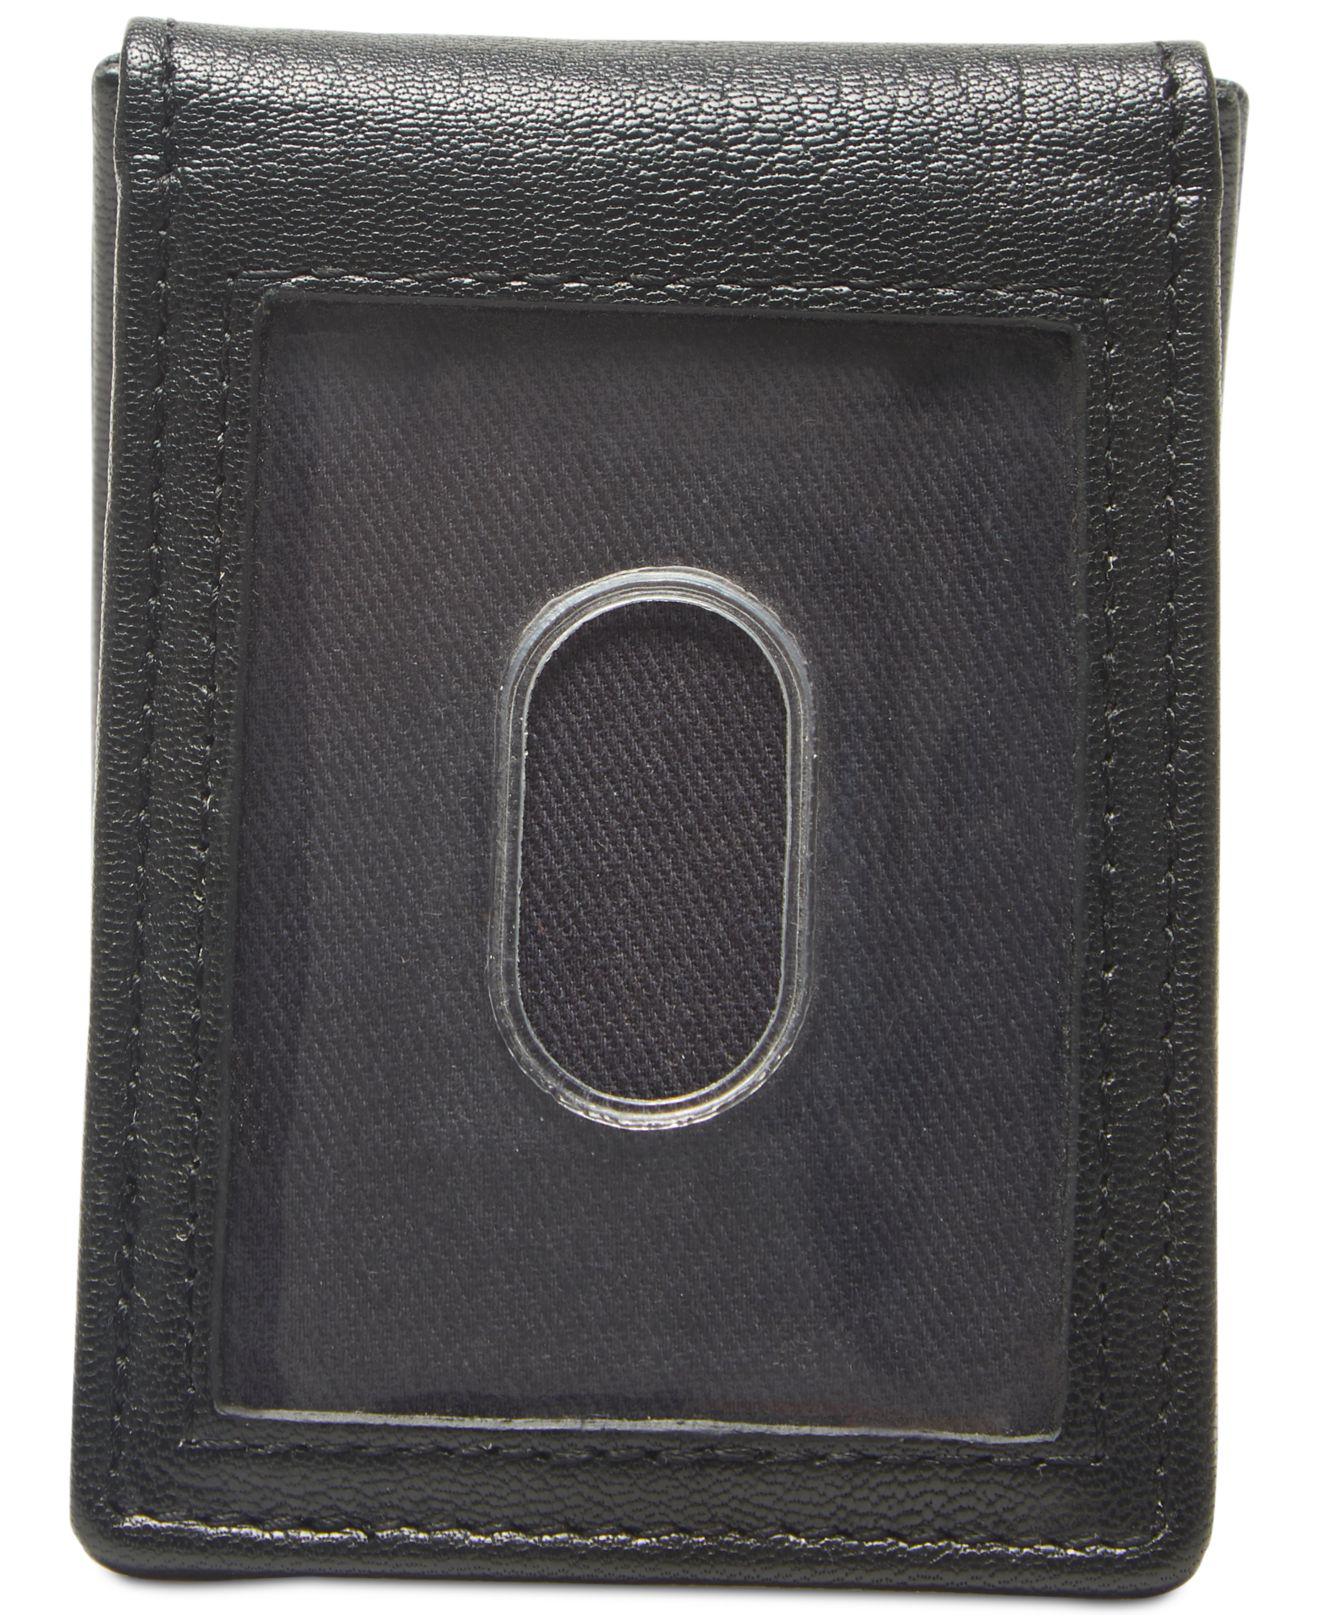 Tommy Hilfiger Lloyd Money Clip Leather Wallet in Black for Men - Lyst